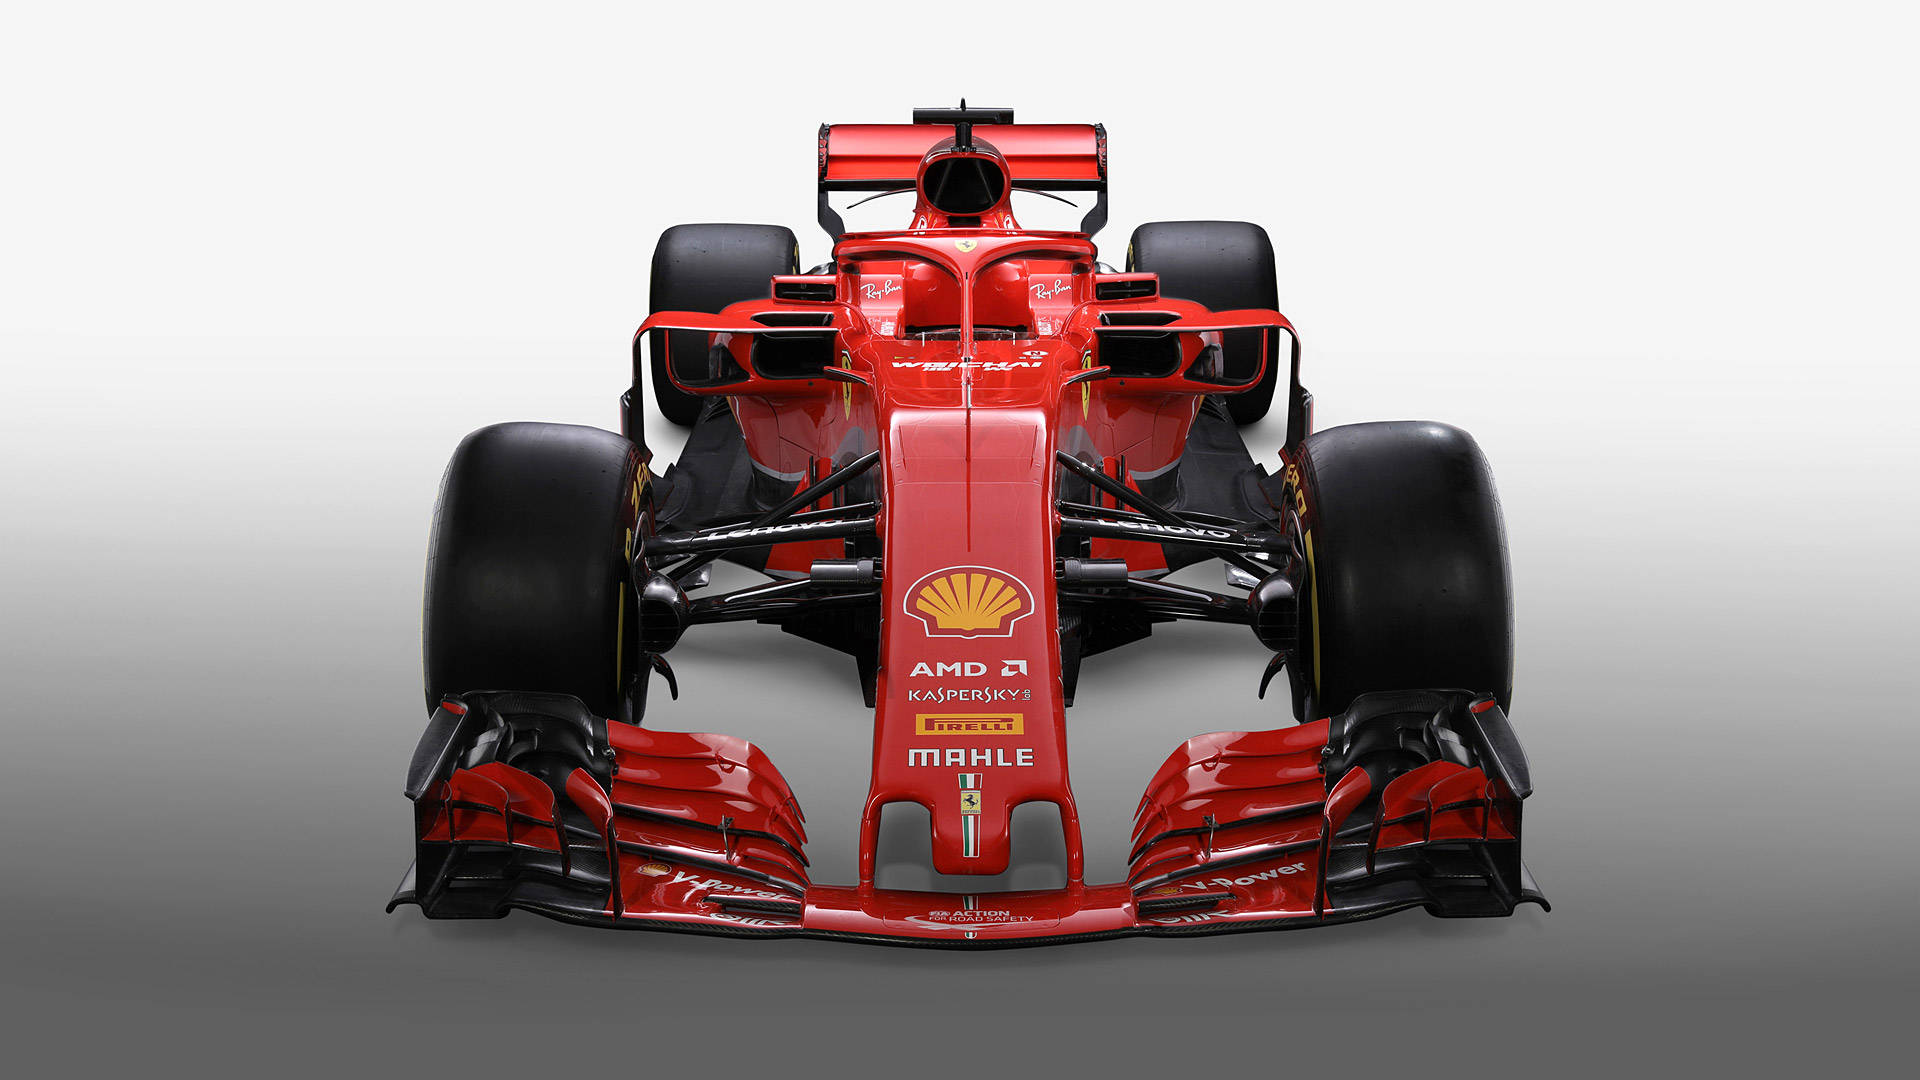 Ferrari F1 2018 Front View